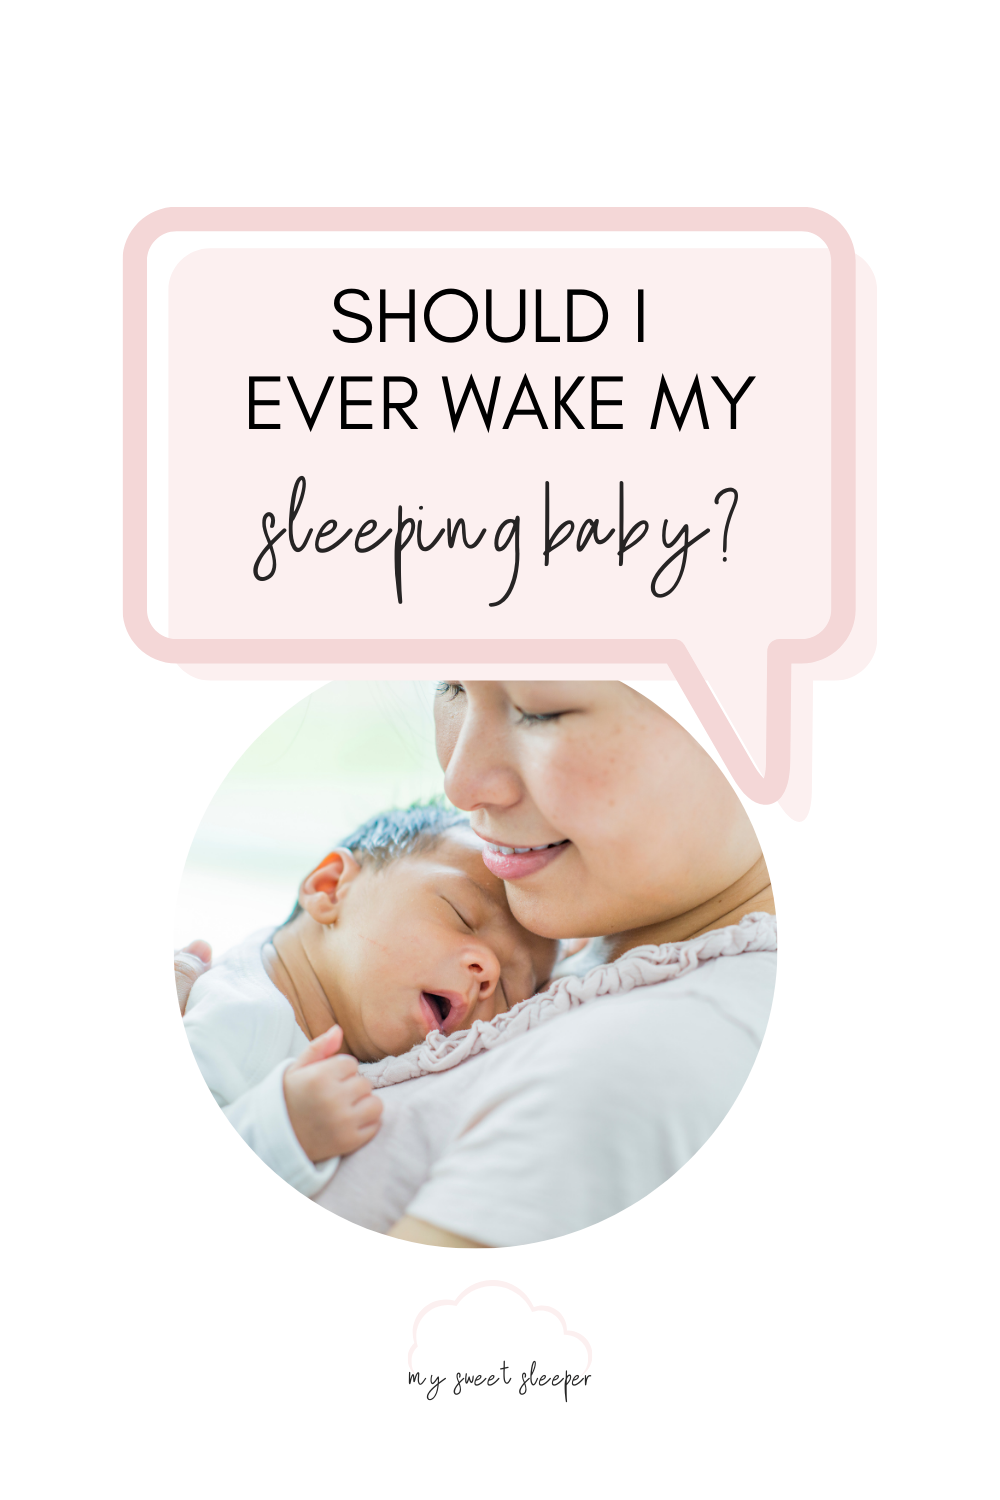 My Sweet Sleeper - Why you should wake your sleeping baby (sometimes)